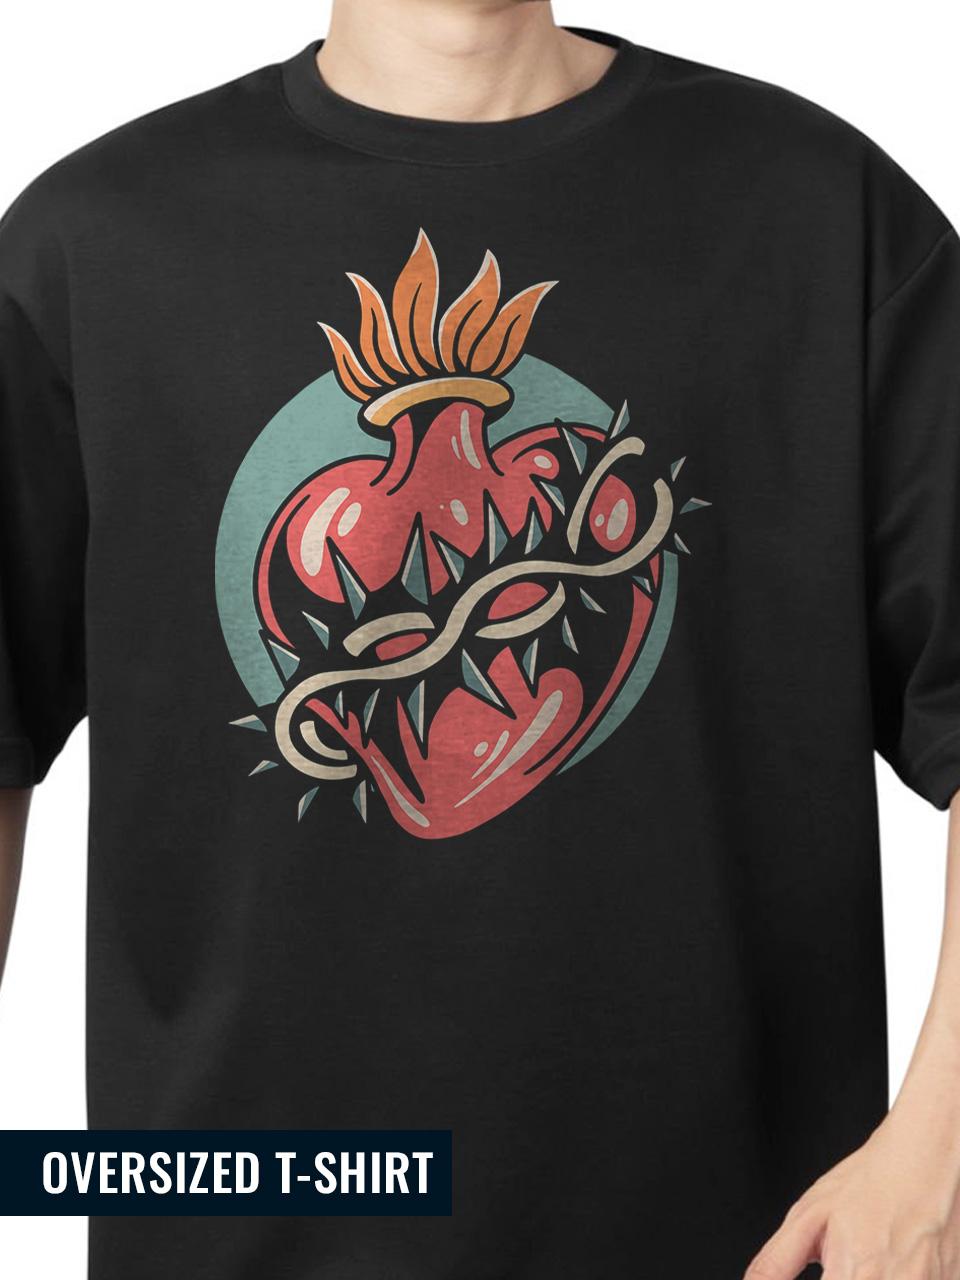 Blazeheart Inferno Oversized T-Shirt